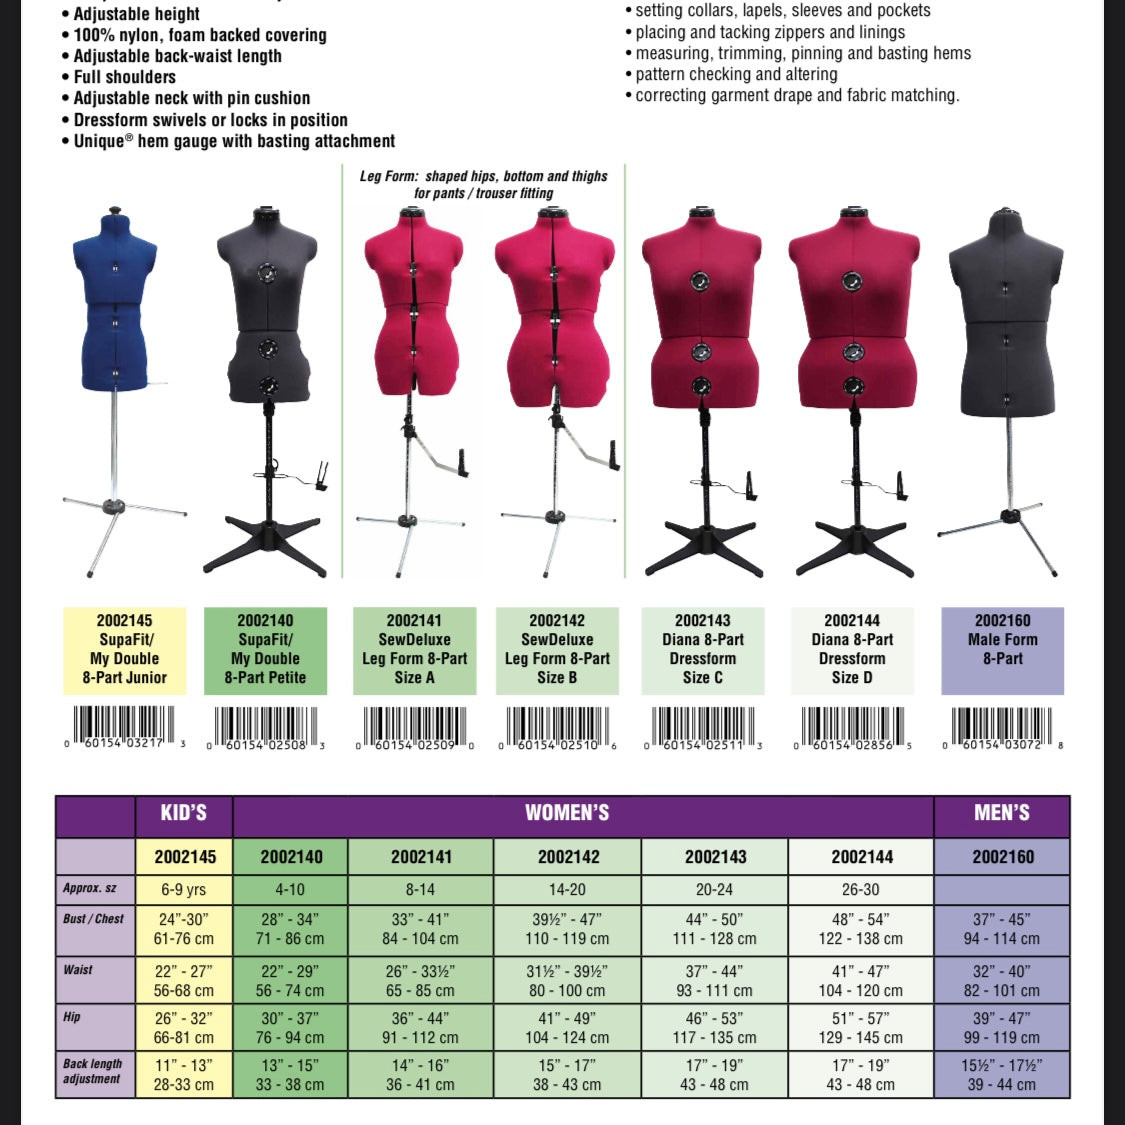 Leg Form - Size A - Dress Size 8-14